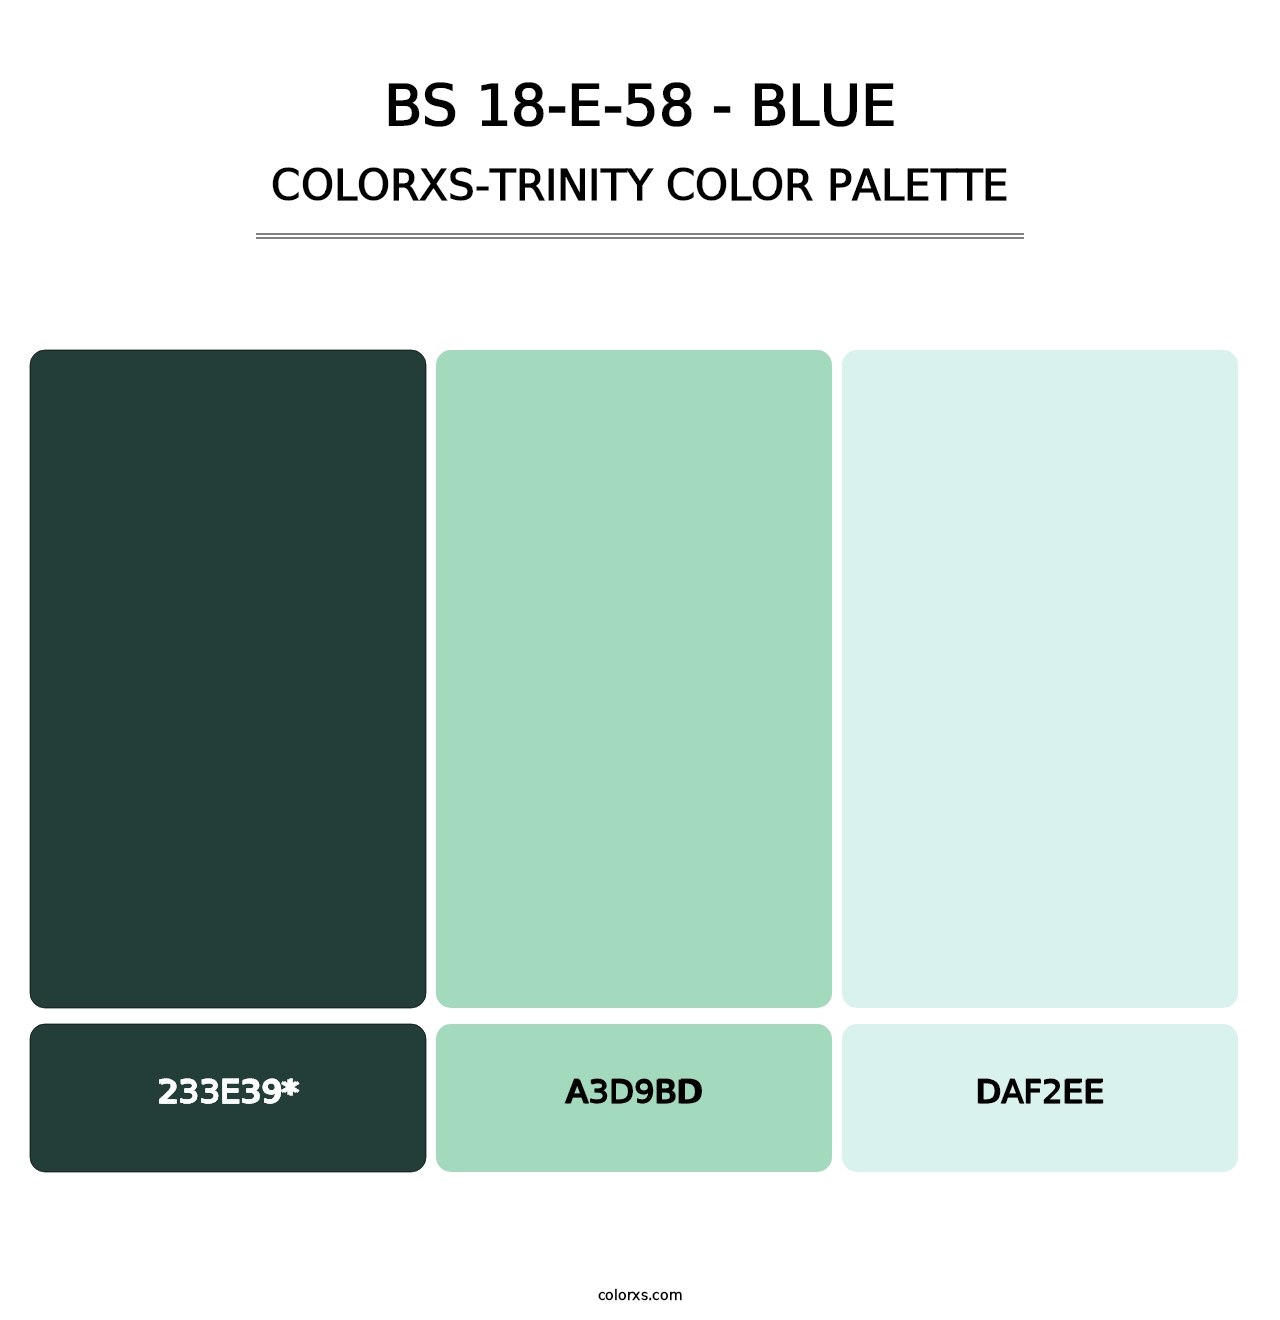 BS 18-E-58 - Blue - Colorxs Trinity Palette